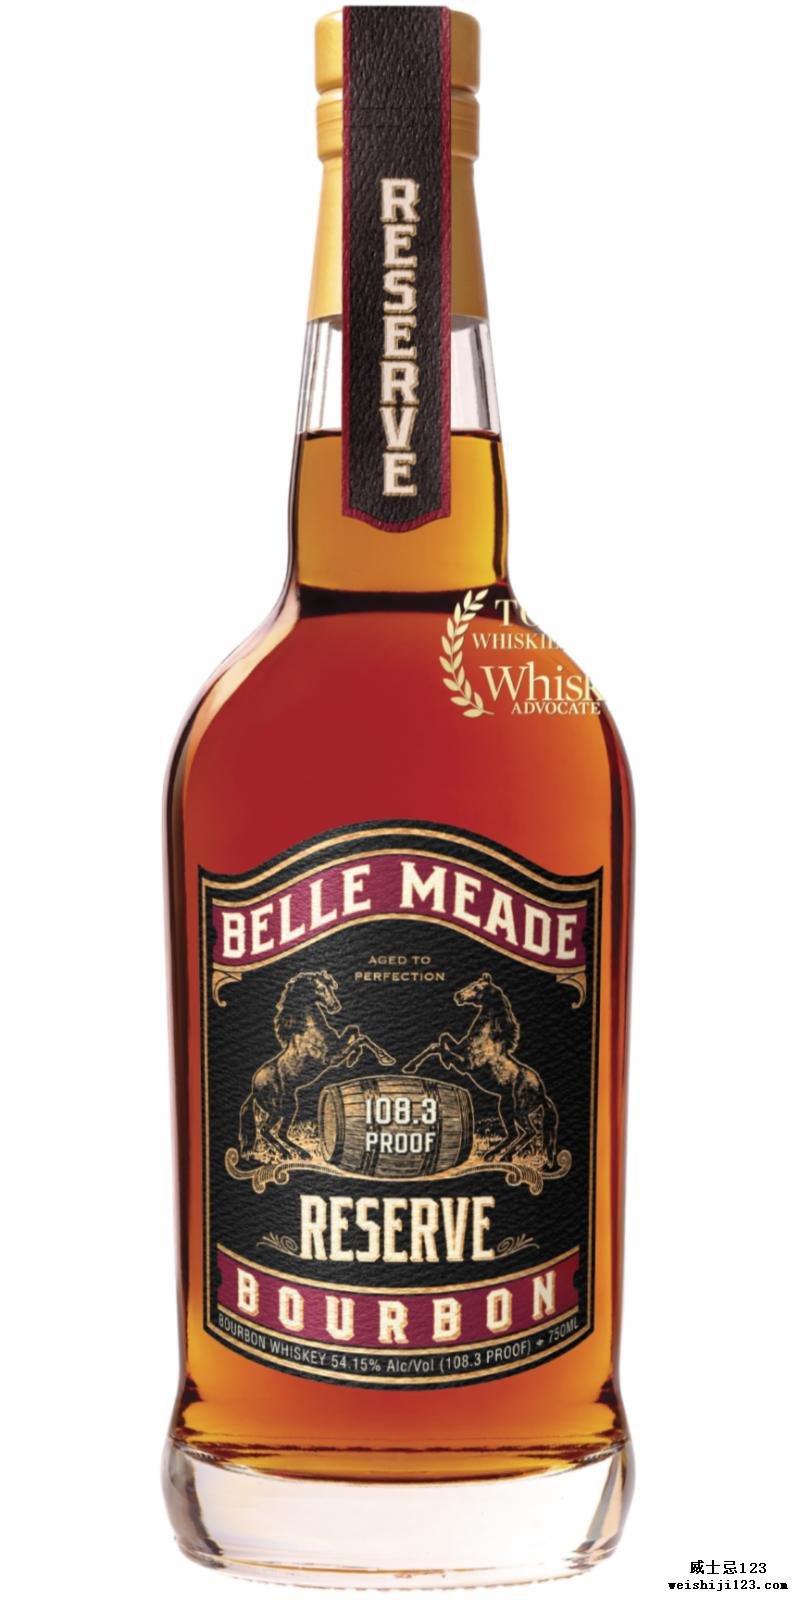 Belle Meade Bourbon Reserve